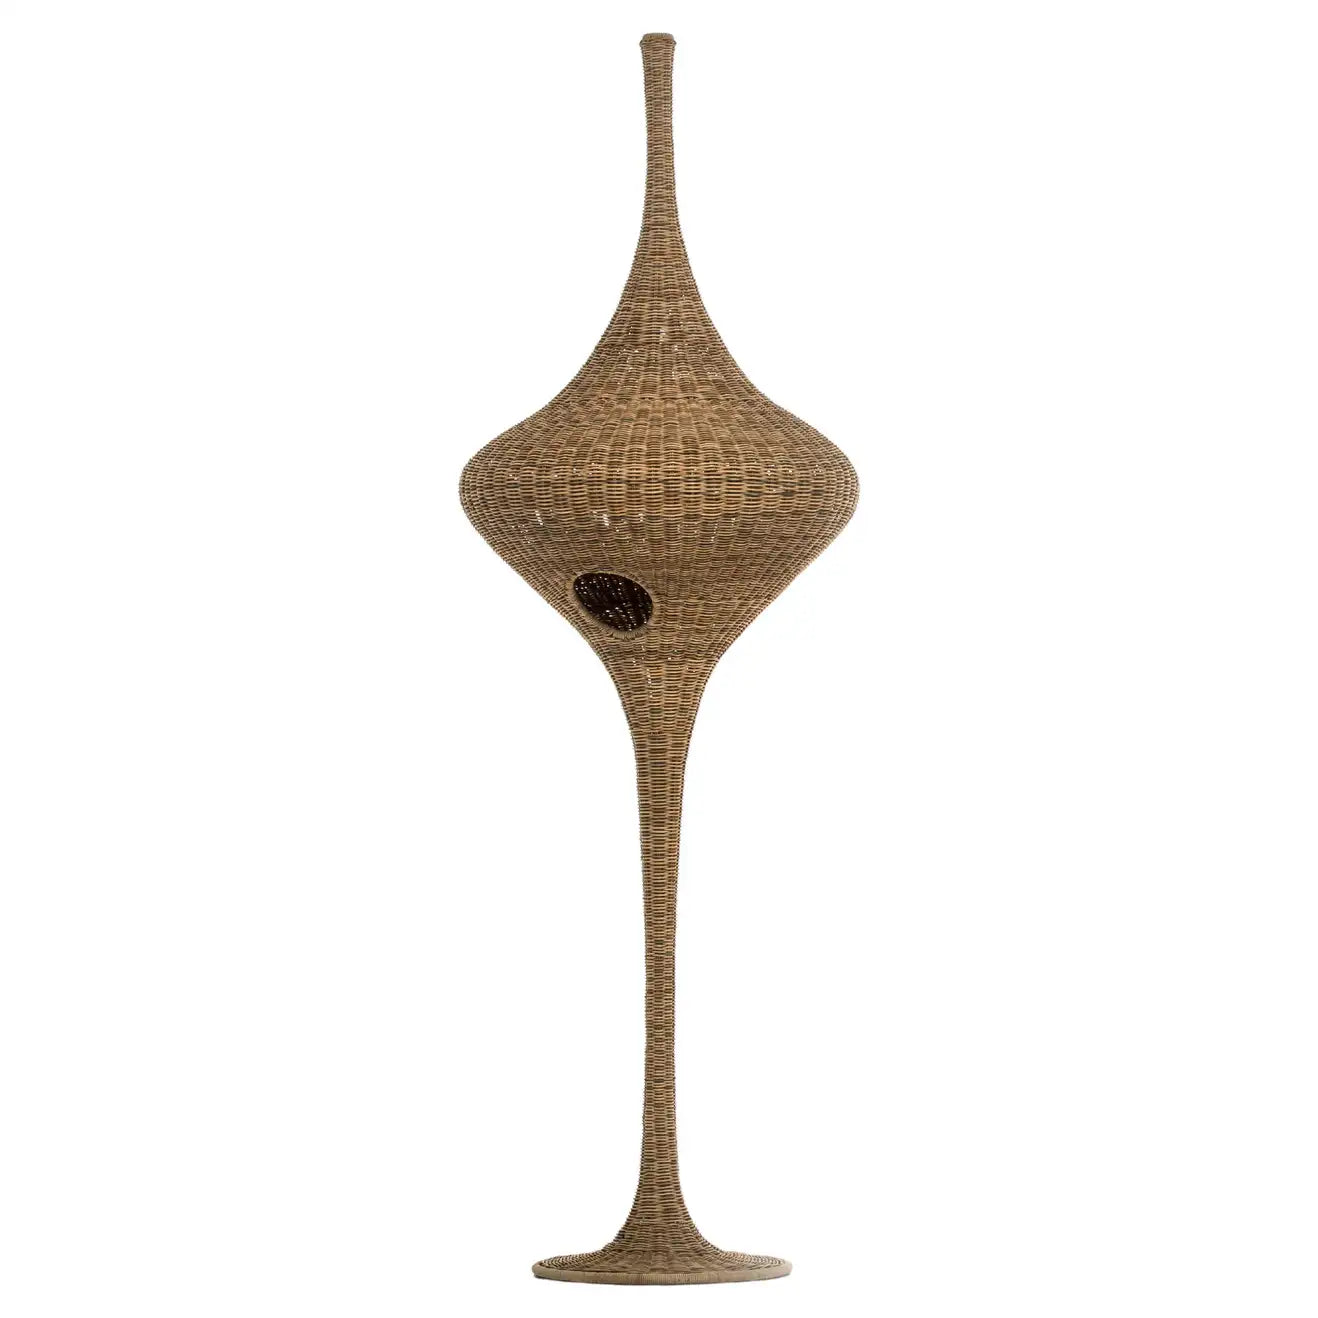 Gervasoni Spin M Floor Lamp in Natural Melange Rattan $1,800.00